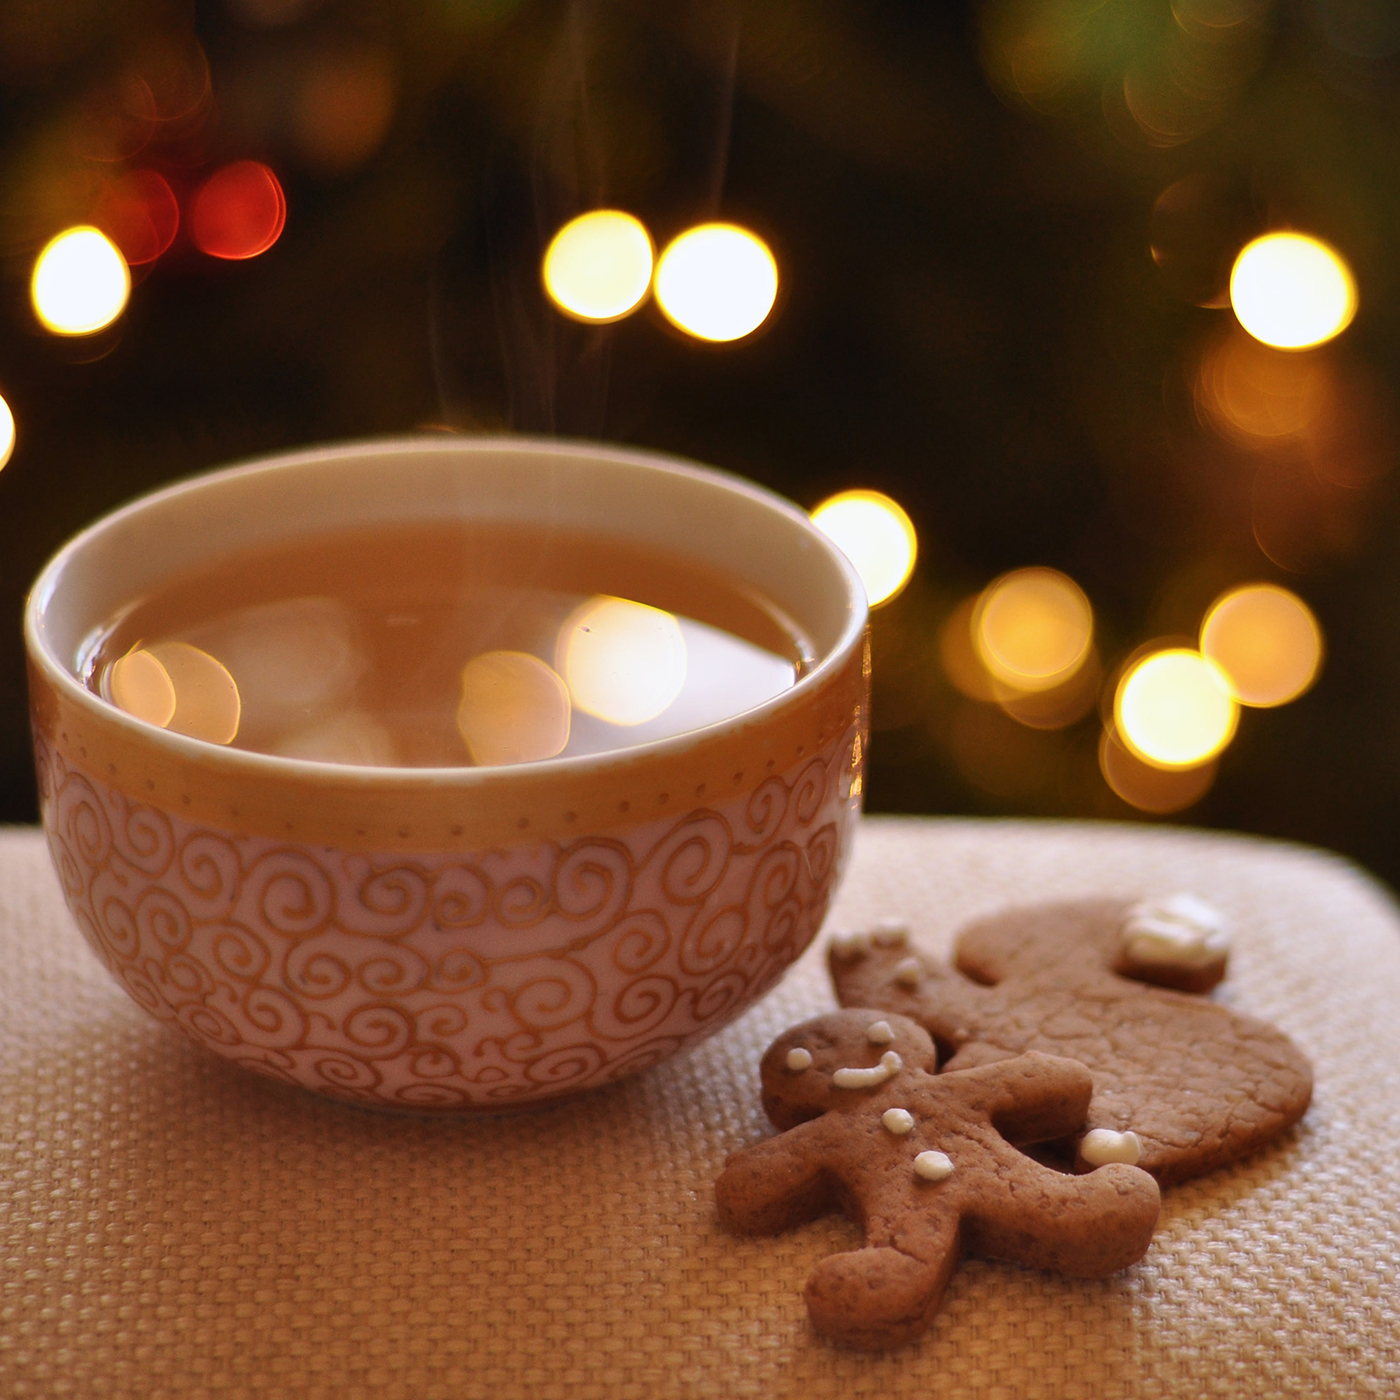 hot mug of tea with gingerbread cookies